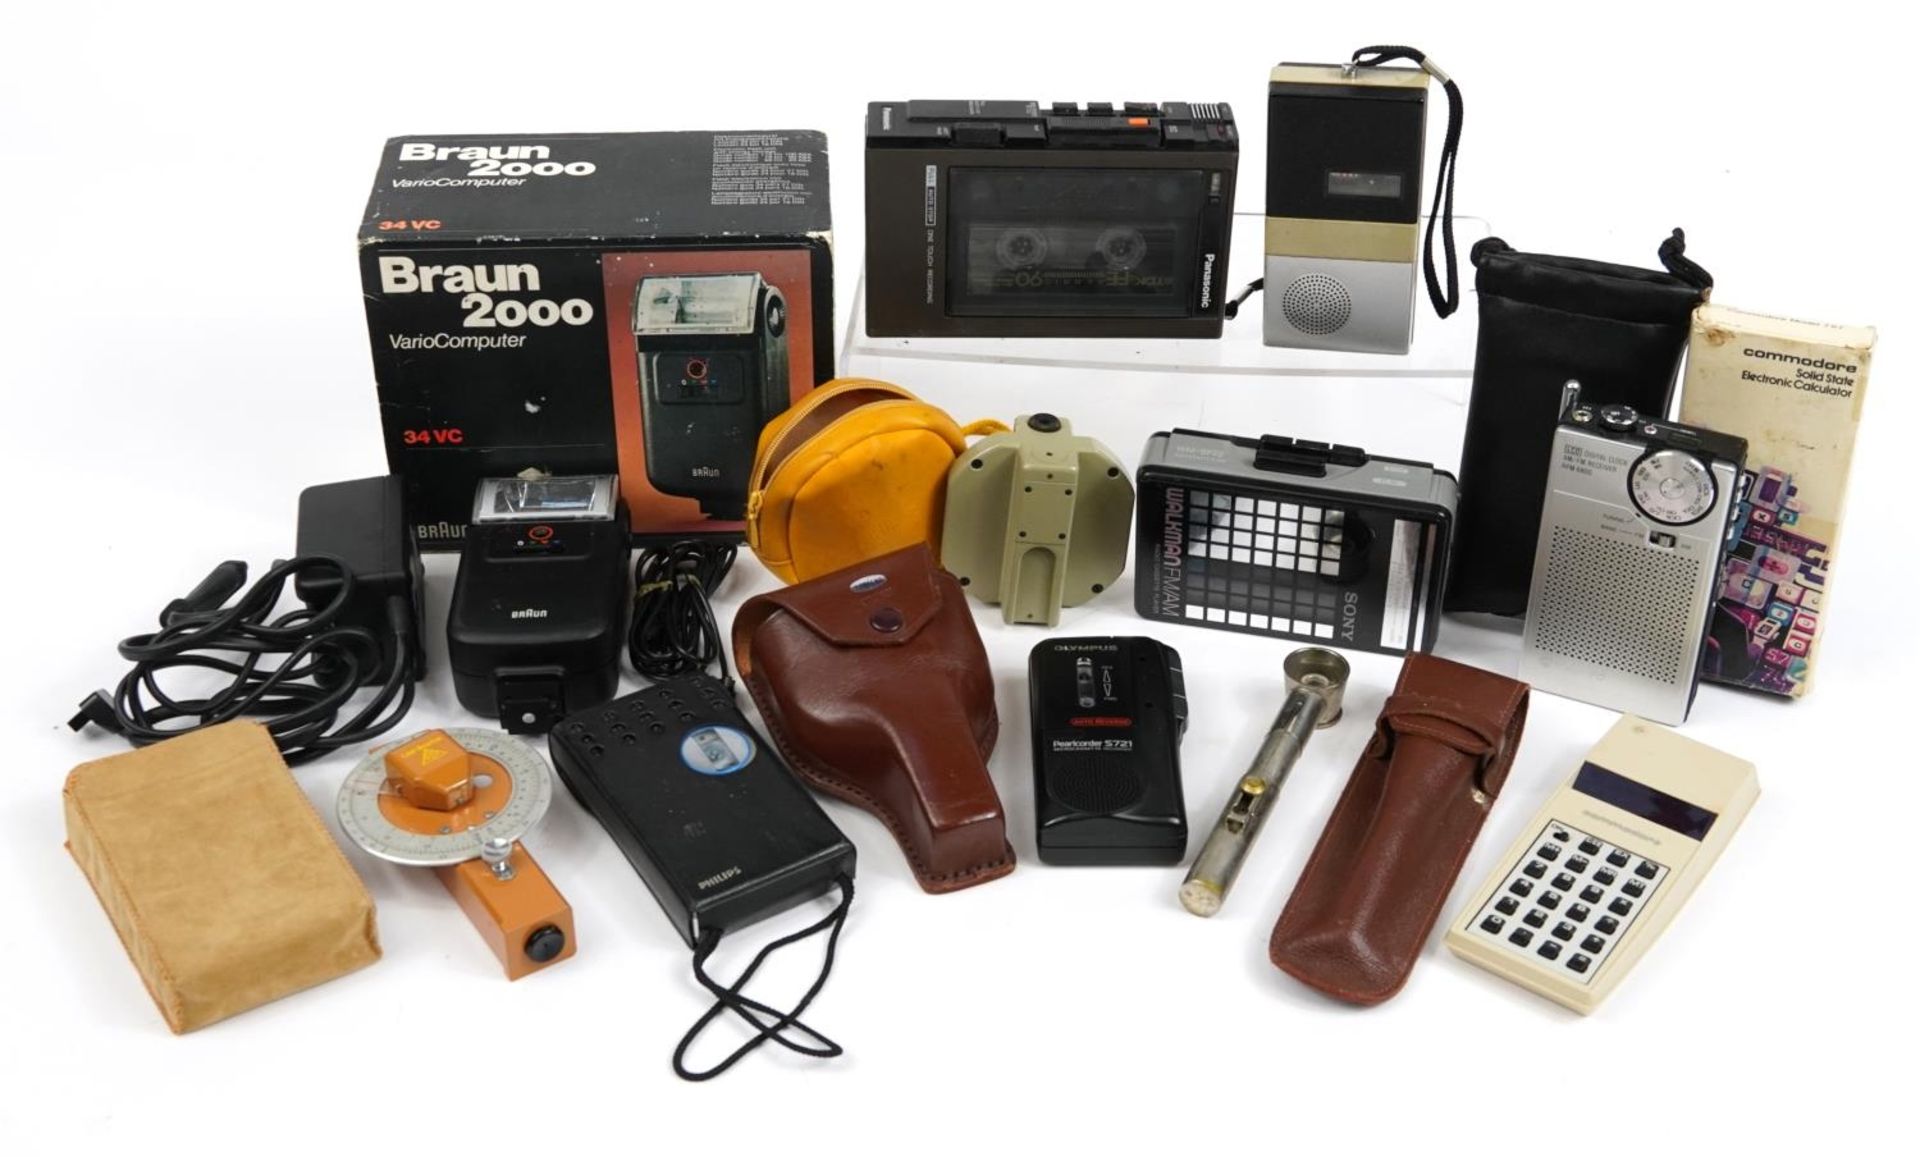 Vintage electricals including Sony Walkman and Braun 2000 Variocomputer